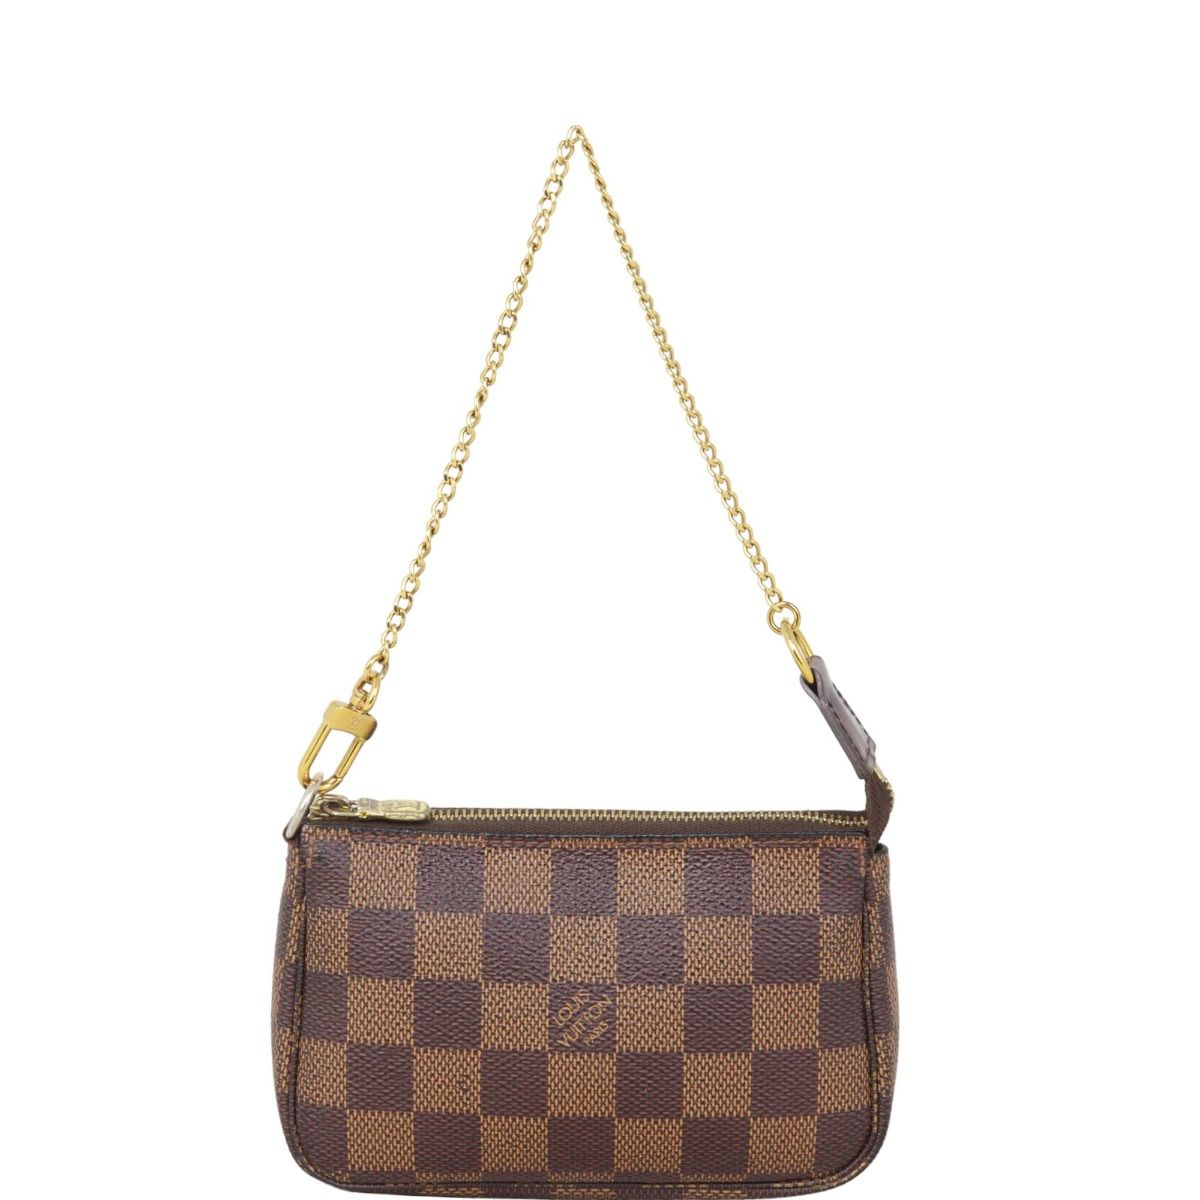 Smaller than a grain of salt': LV's miniscule handbag sold for $63,000 |  World News - Business Standard